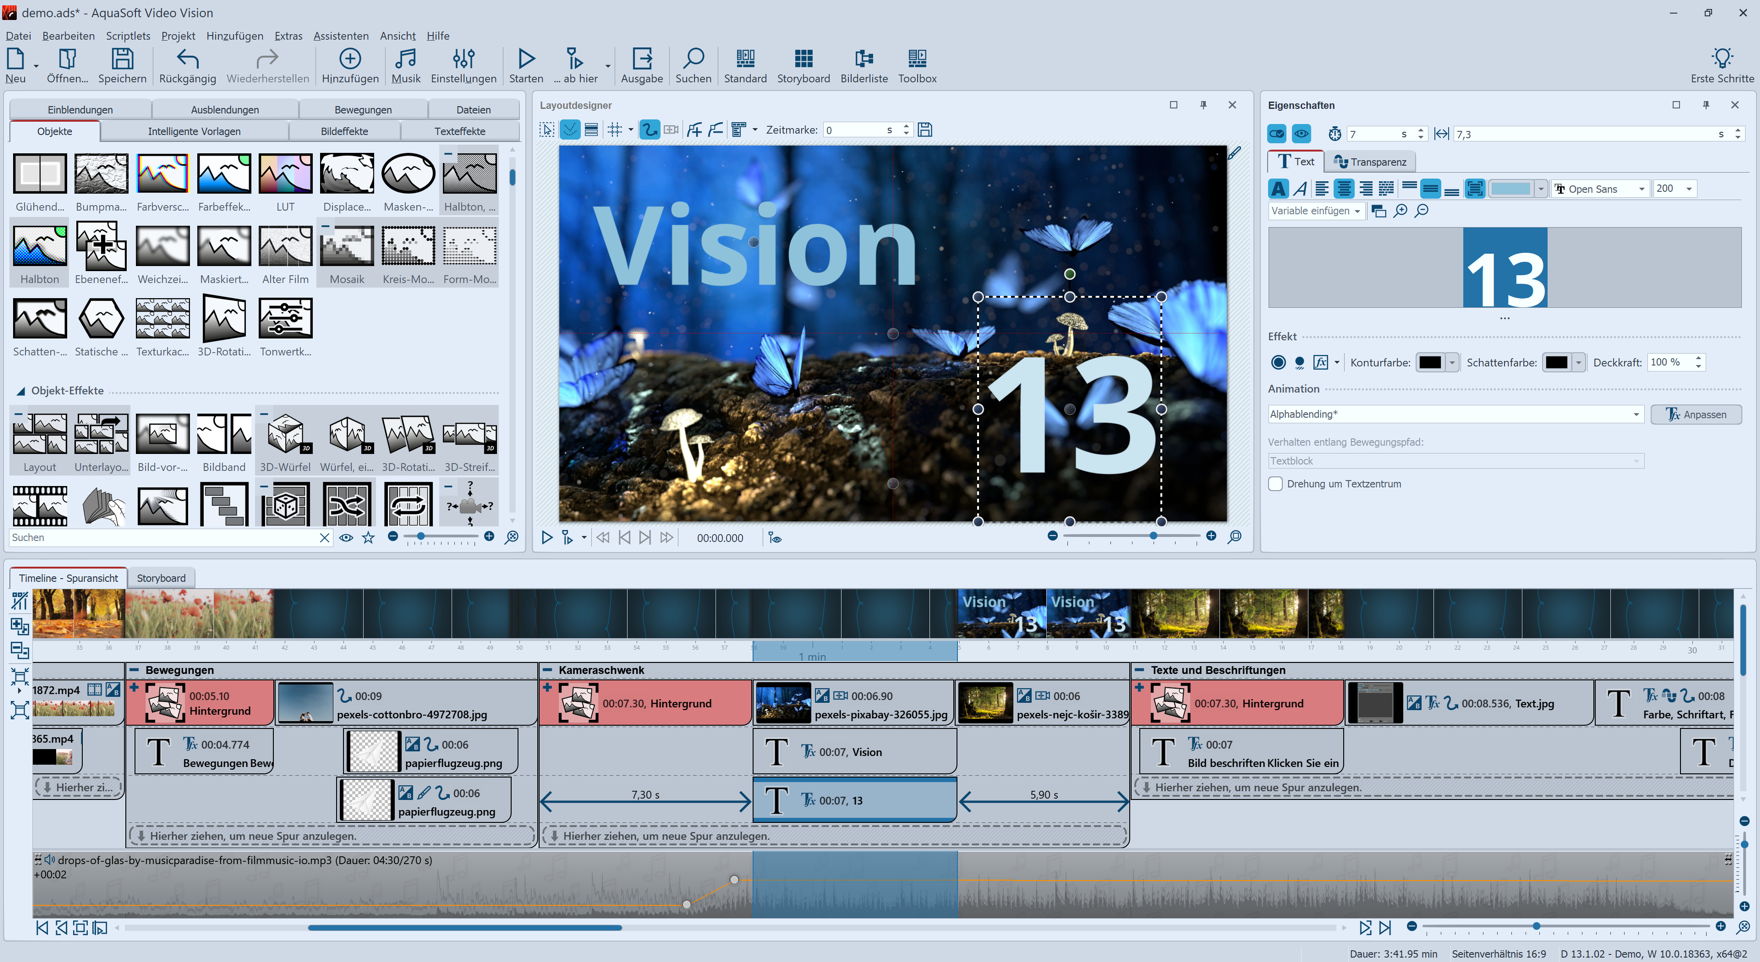 AquaSoft Video Vision 14.2.13 for ios instal